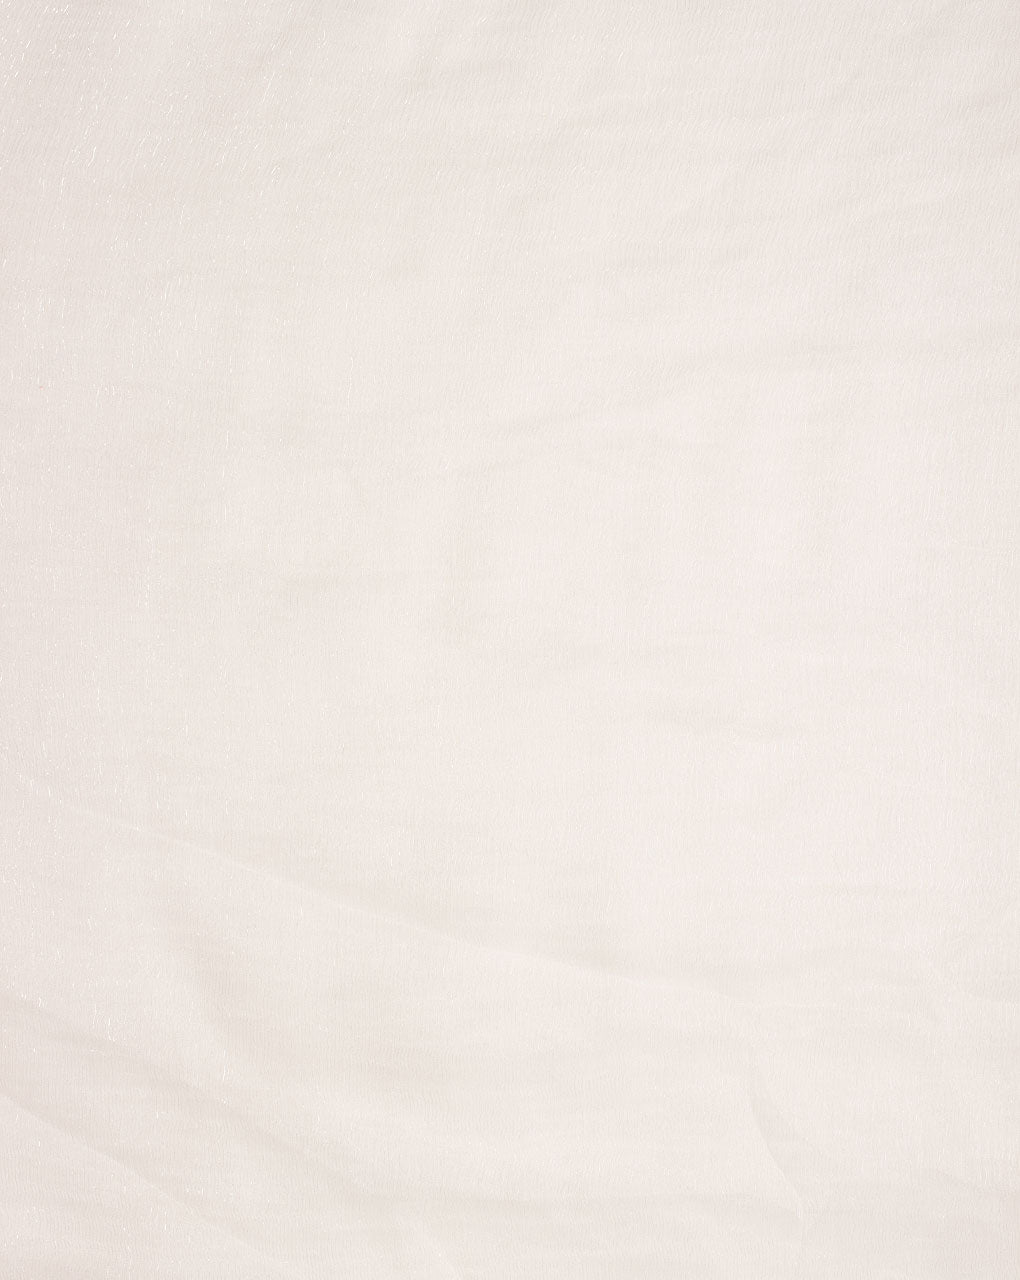 30's Dyeable Shimmer Chiffon Fabric - Fabriclore.com